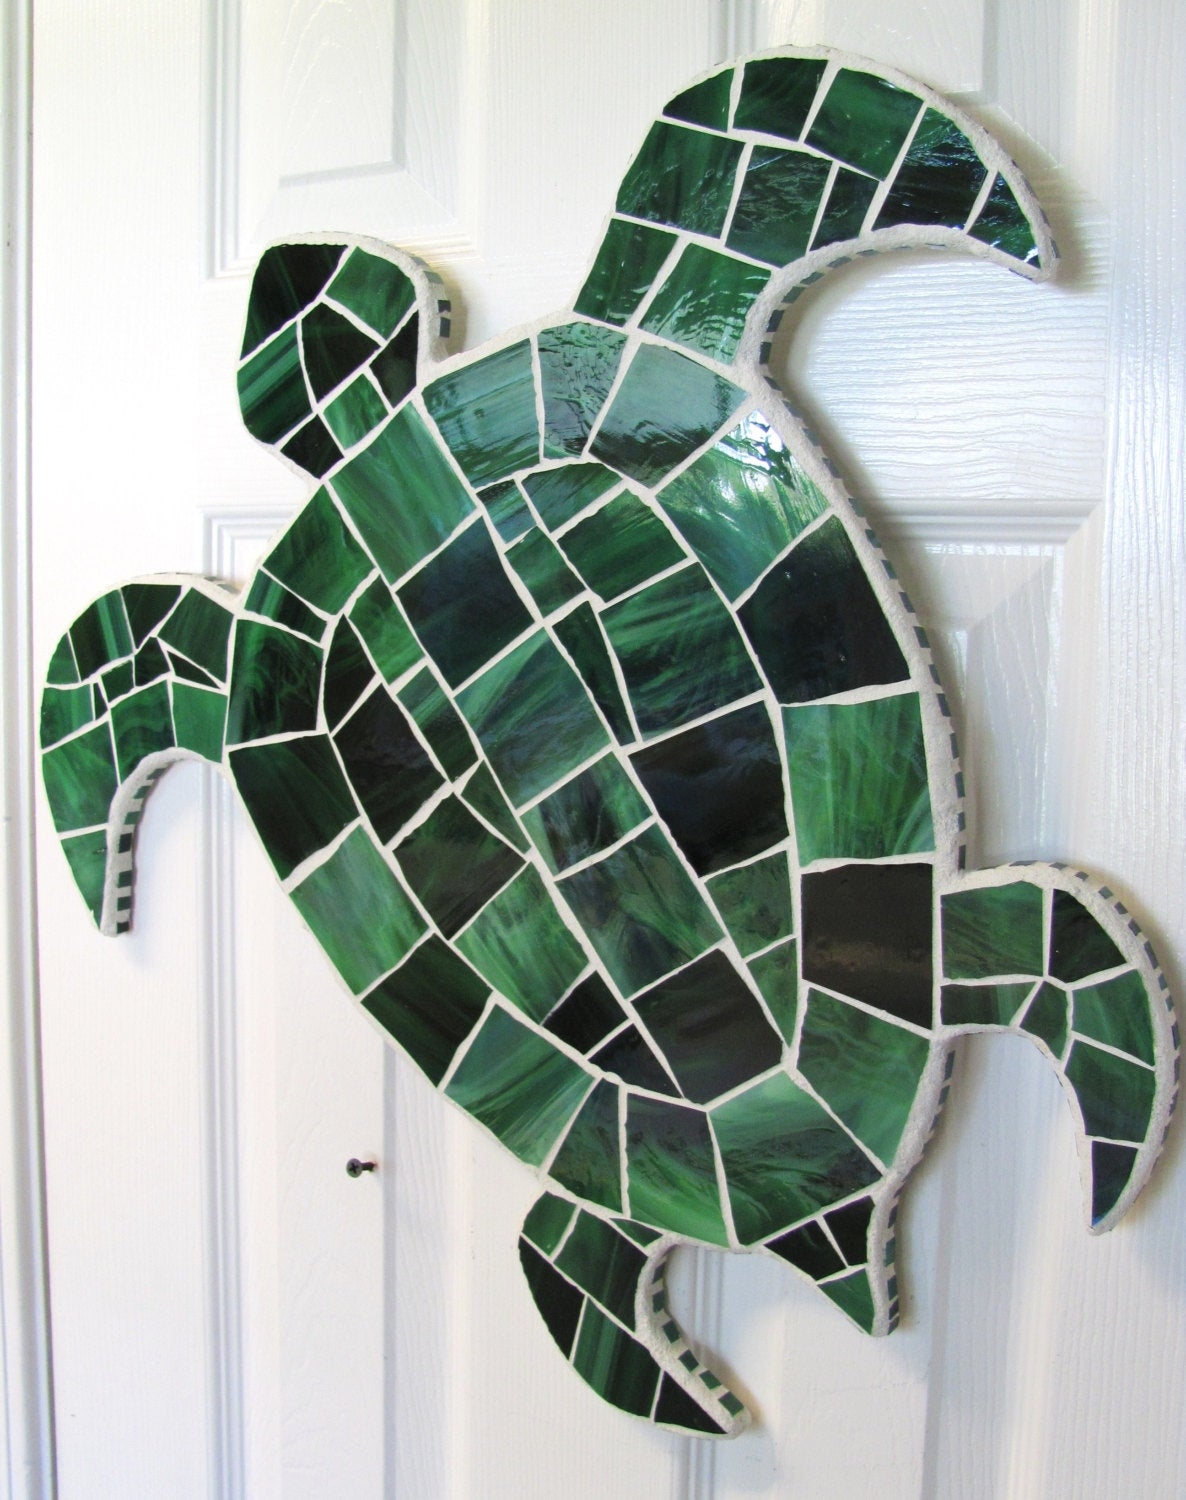 Stained glass mosaic sea turtle shape